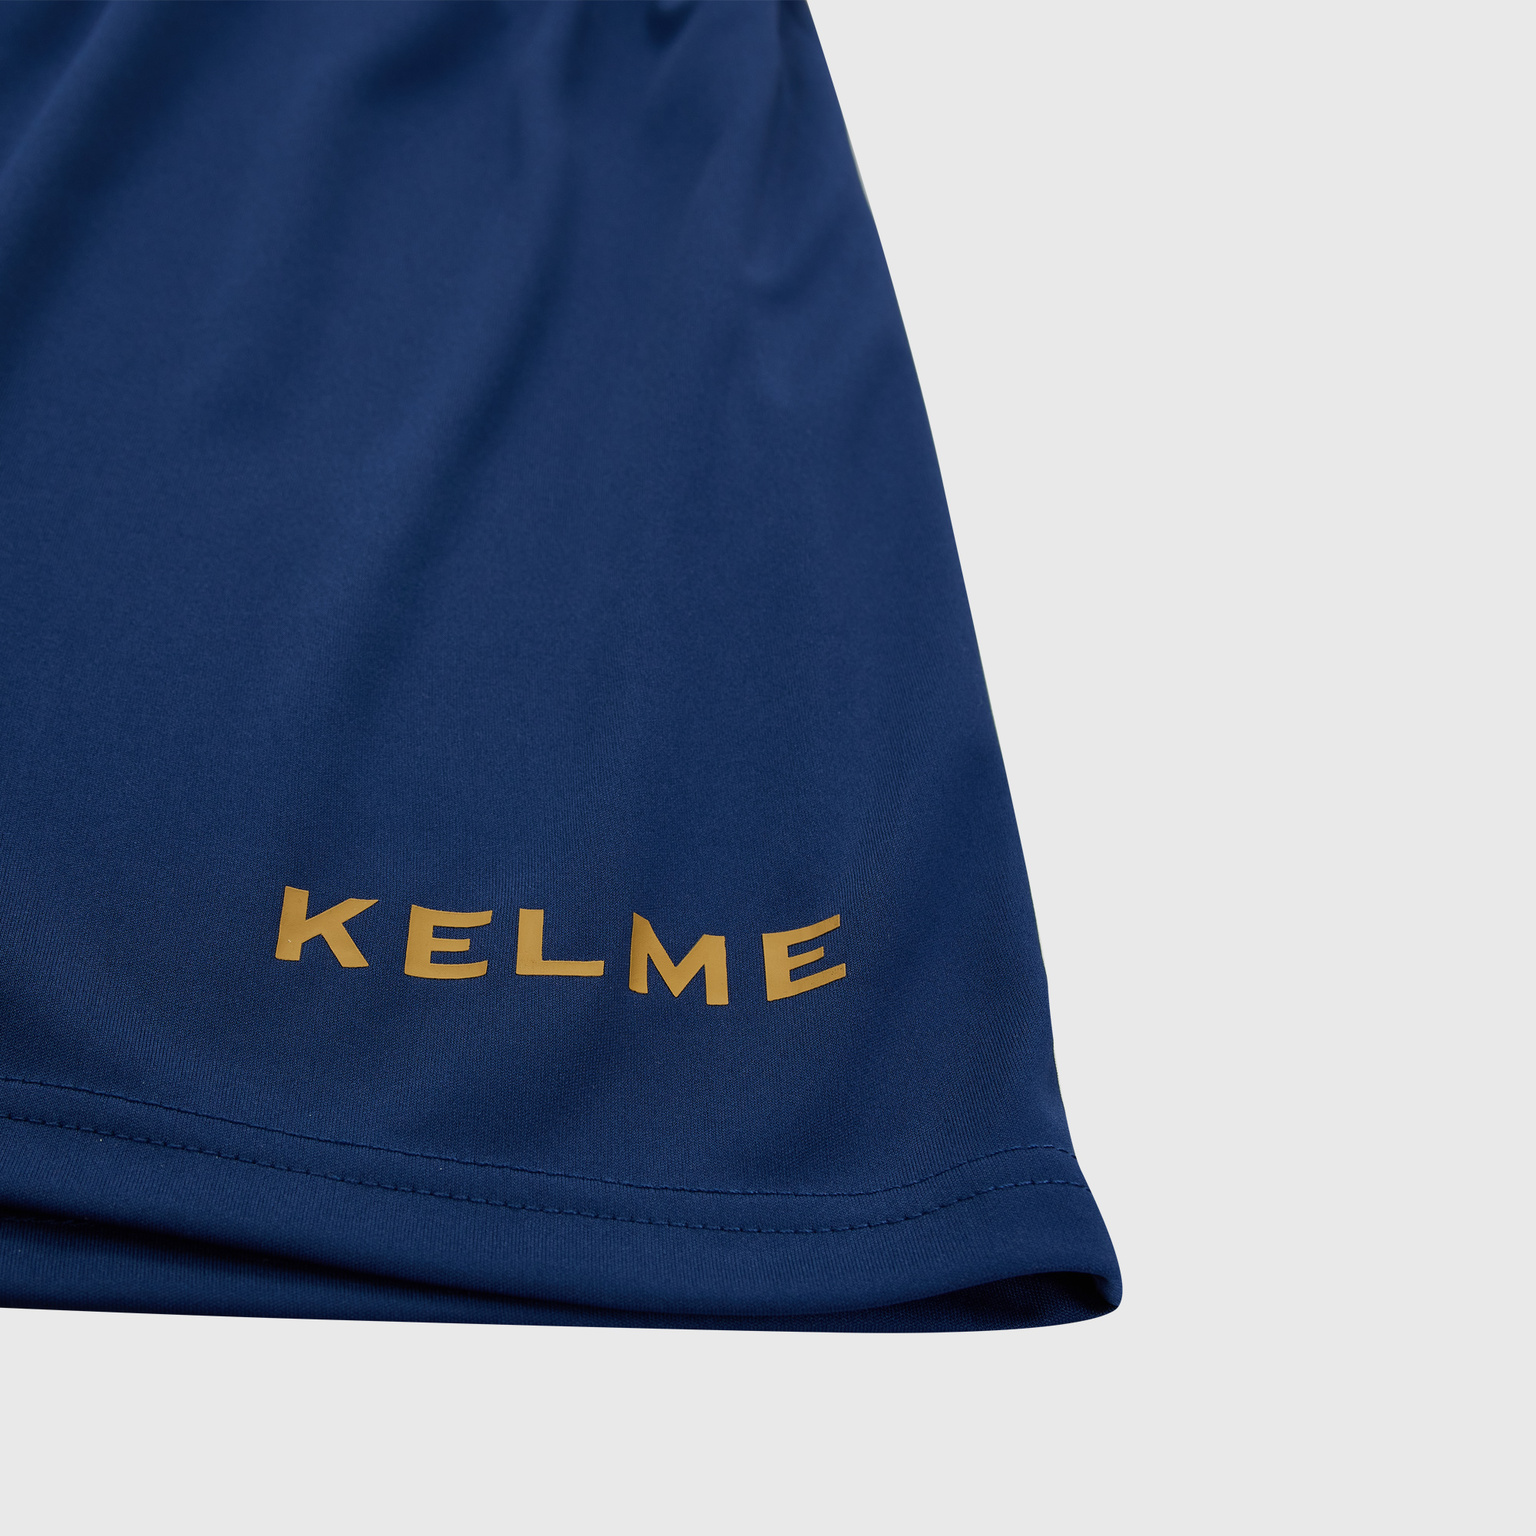 Комплект формы Kelme Football Set 3871001-996